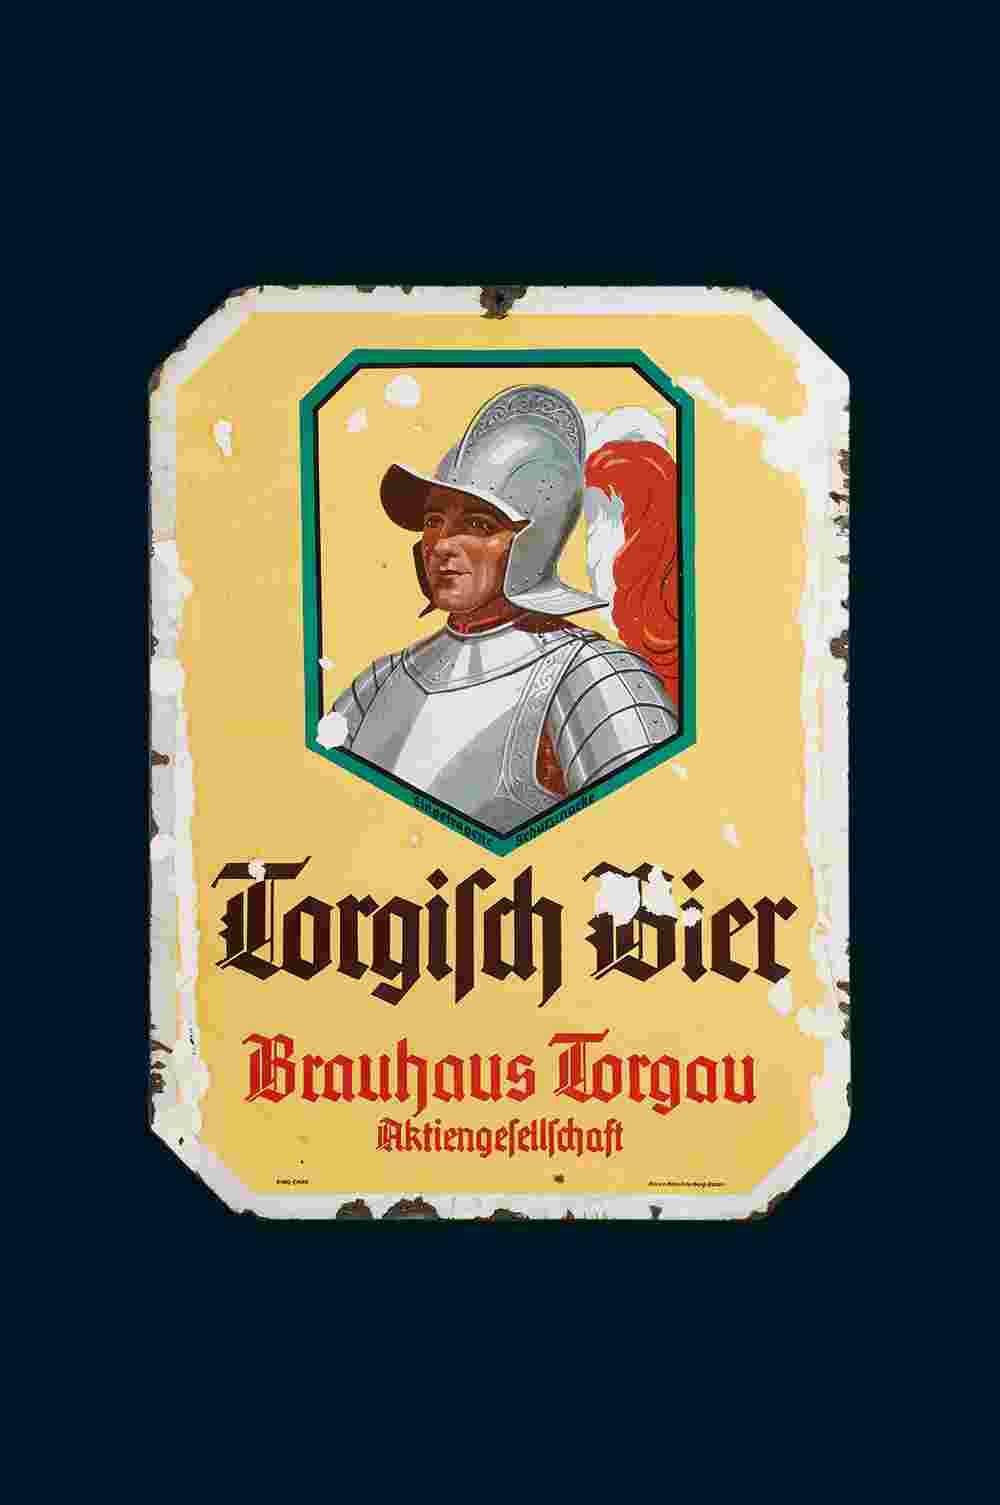 Torgisch Bier Brauhaus Torgau 